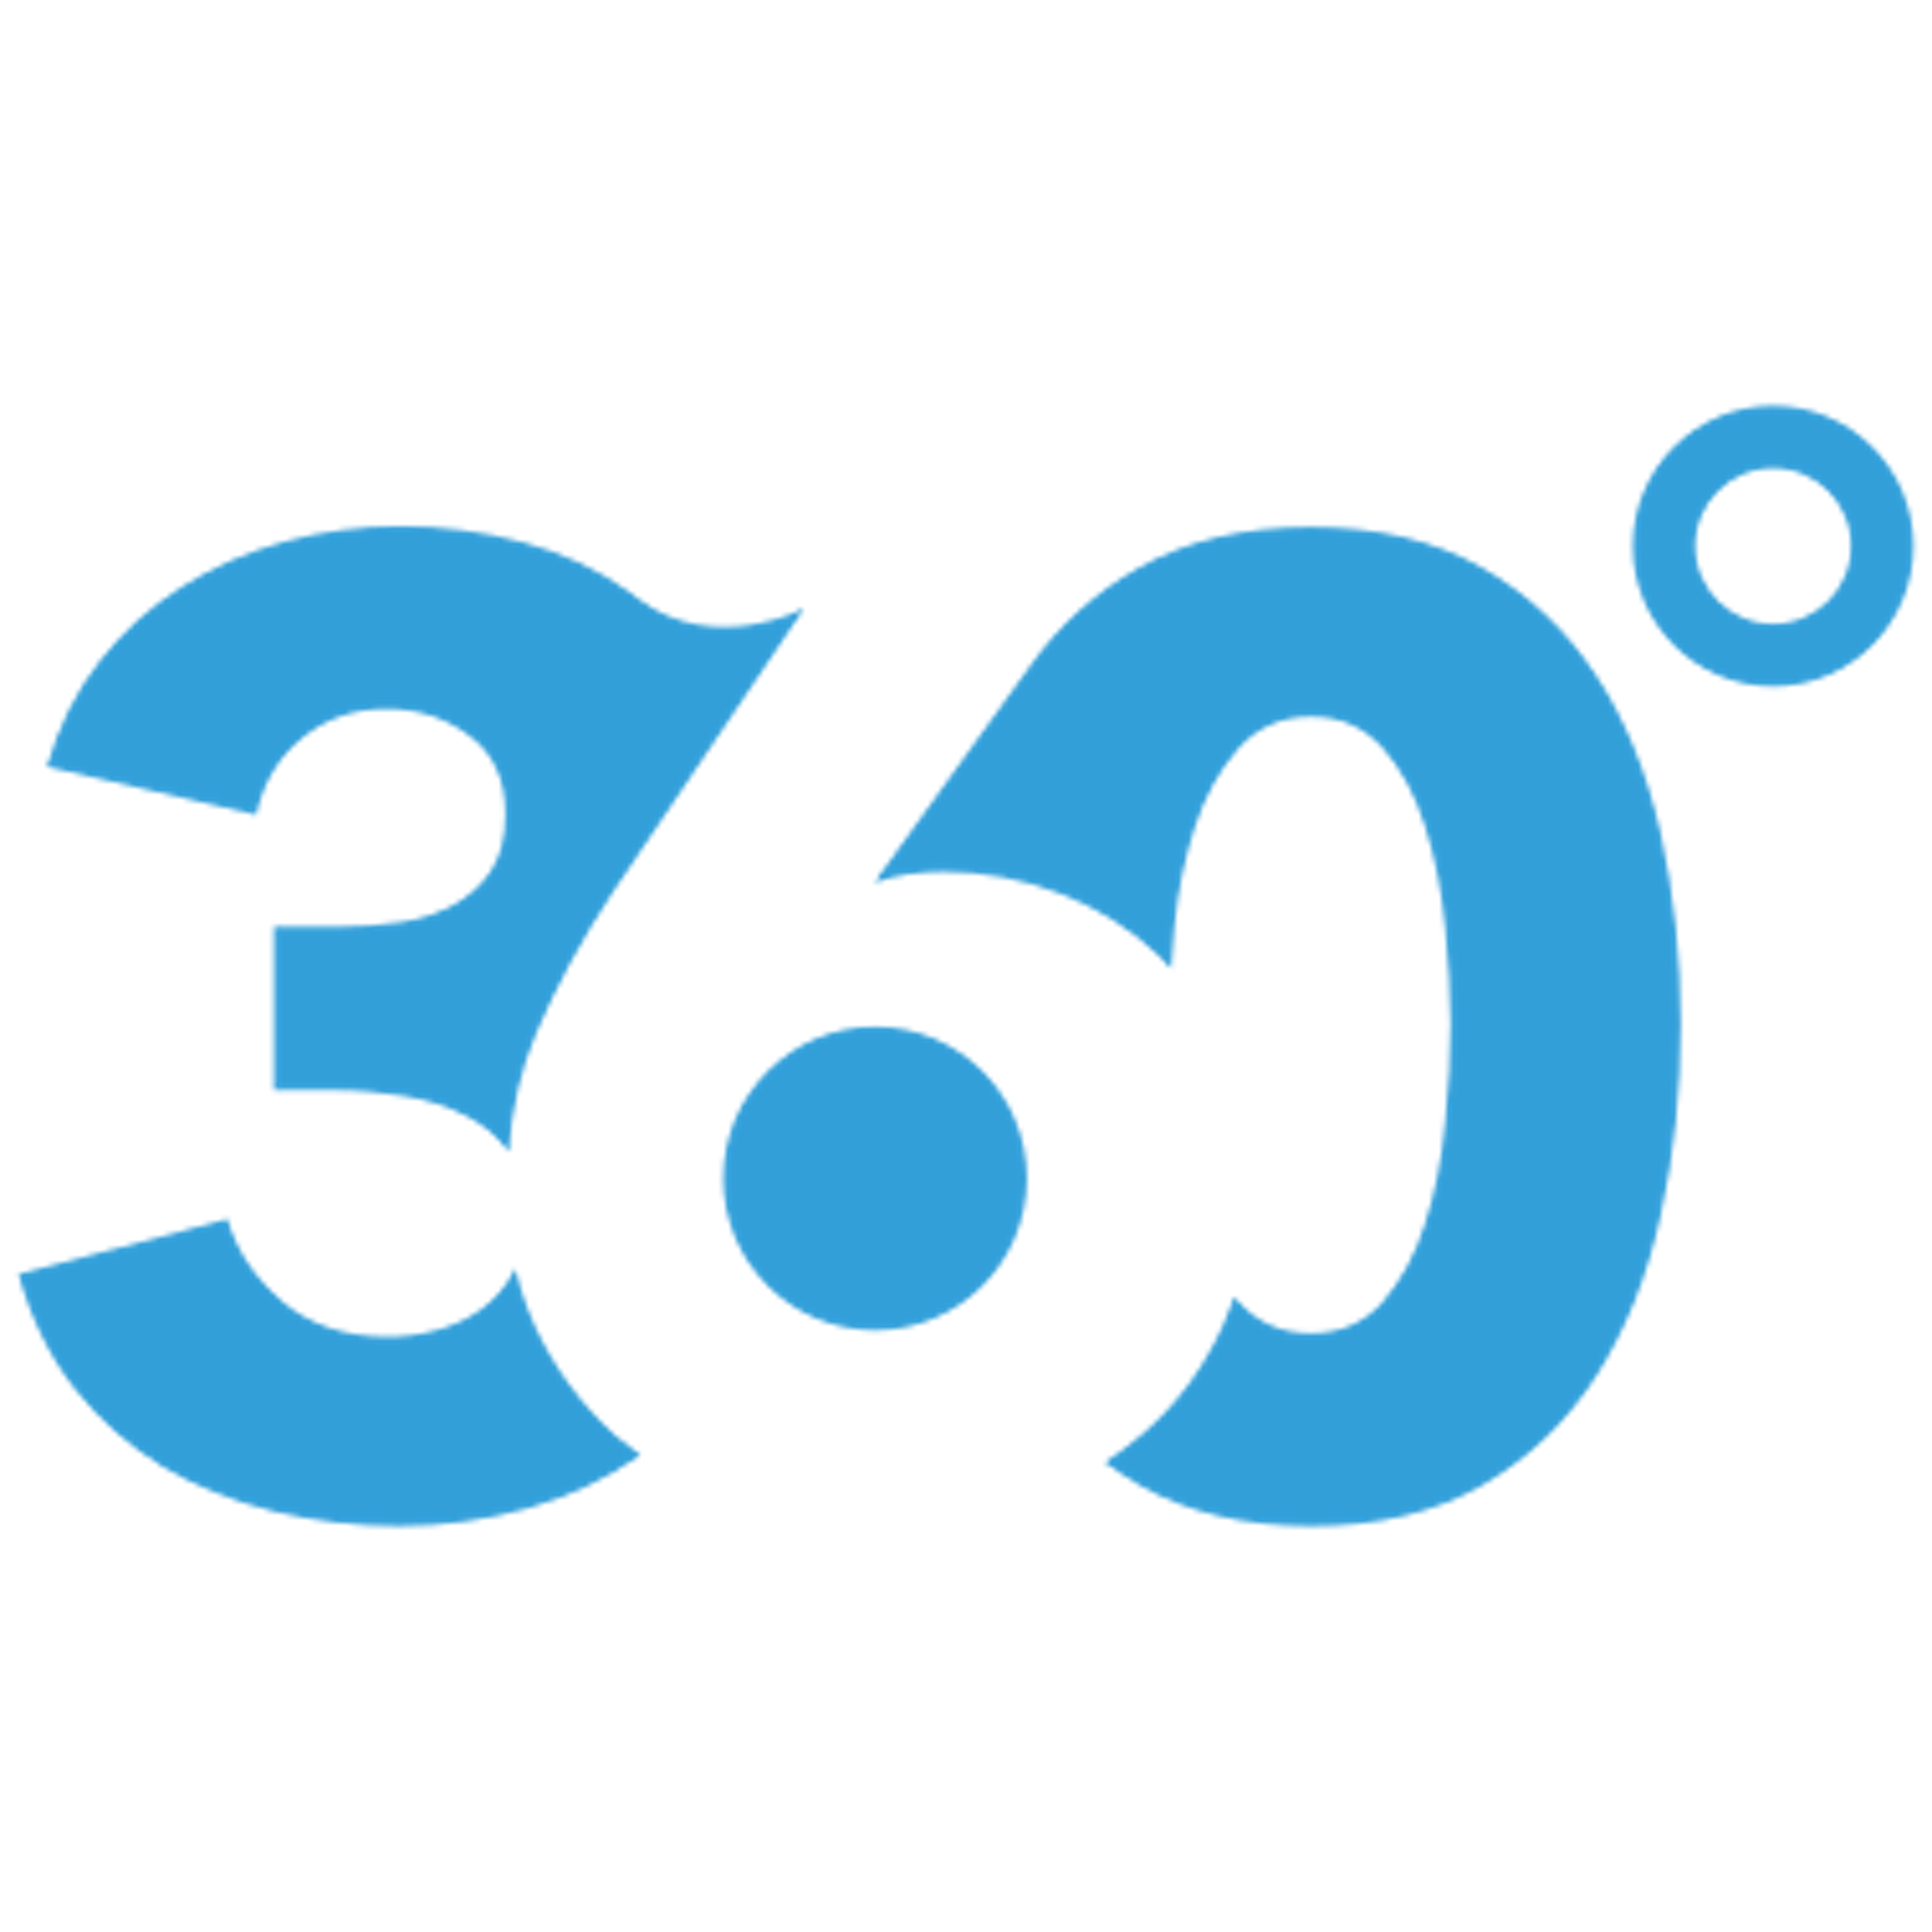 Site Search 360 Logo